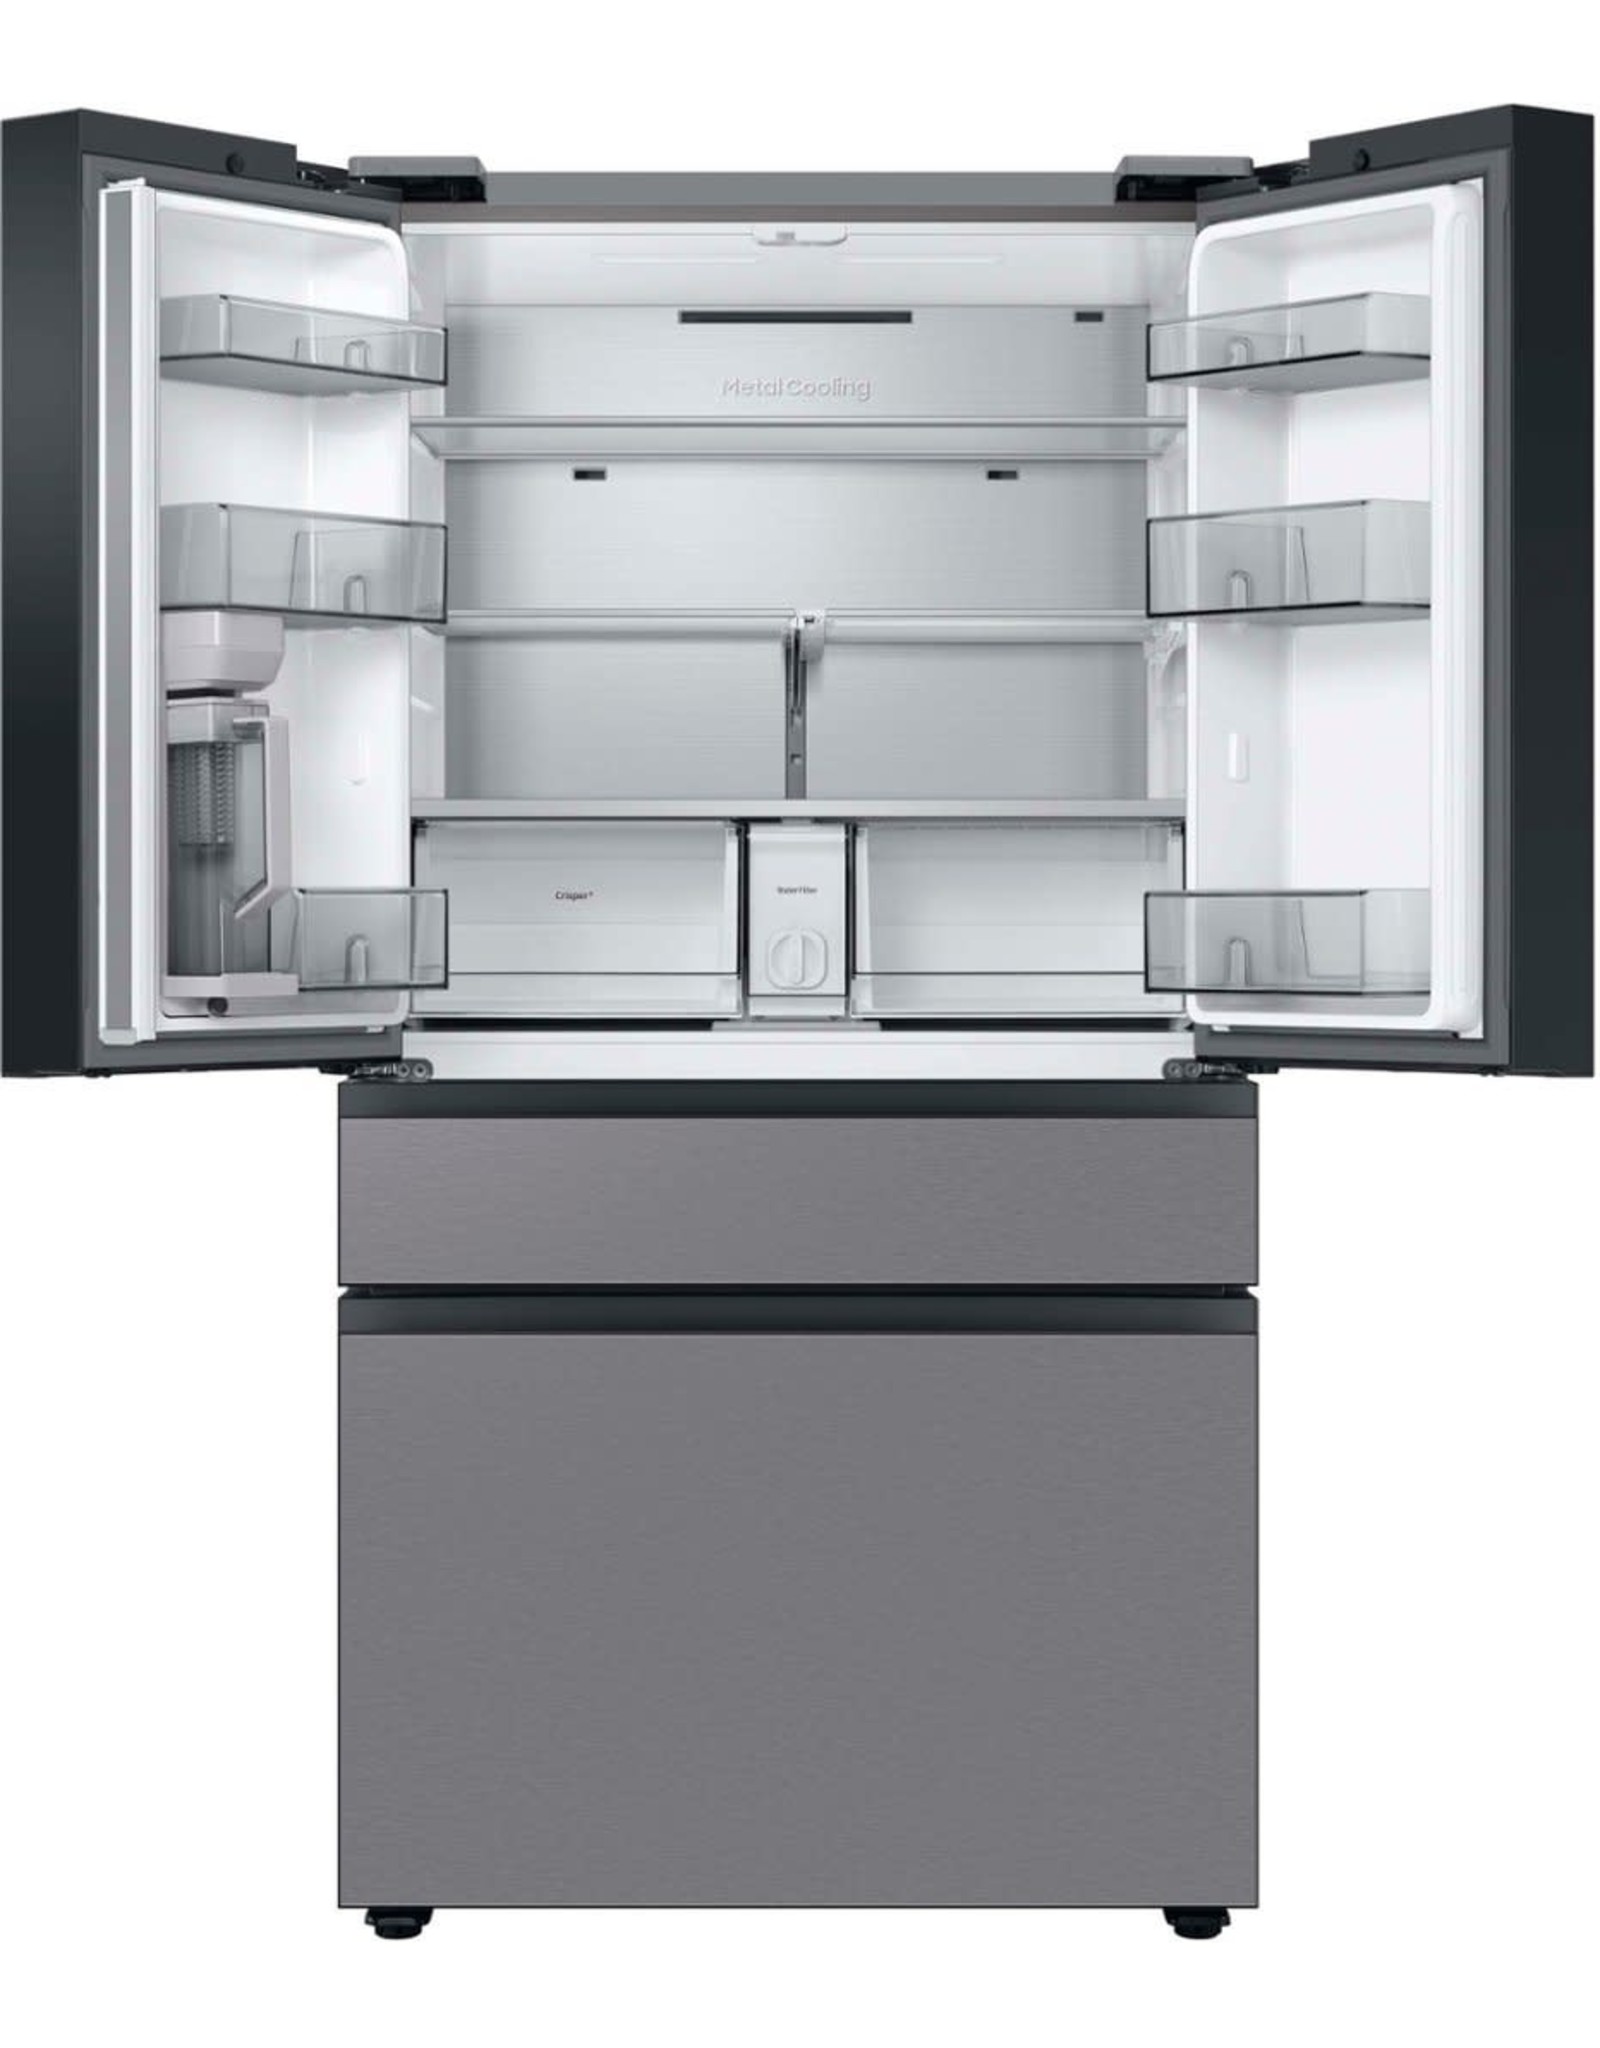 SAMSUNG RF23BB8600APAA   Samsung - Bespoke 23 cu. ft. Counter Depth 4-Door French Door Refrigerator with AutoFill Water Pitcher - Stainless steel